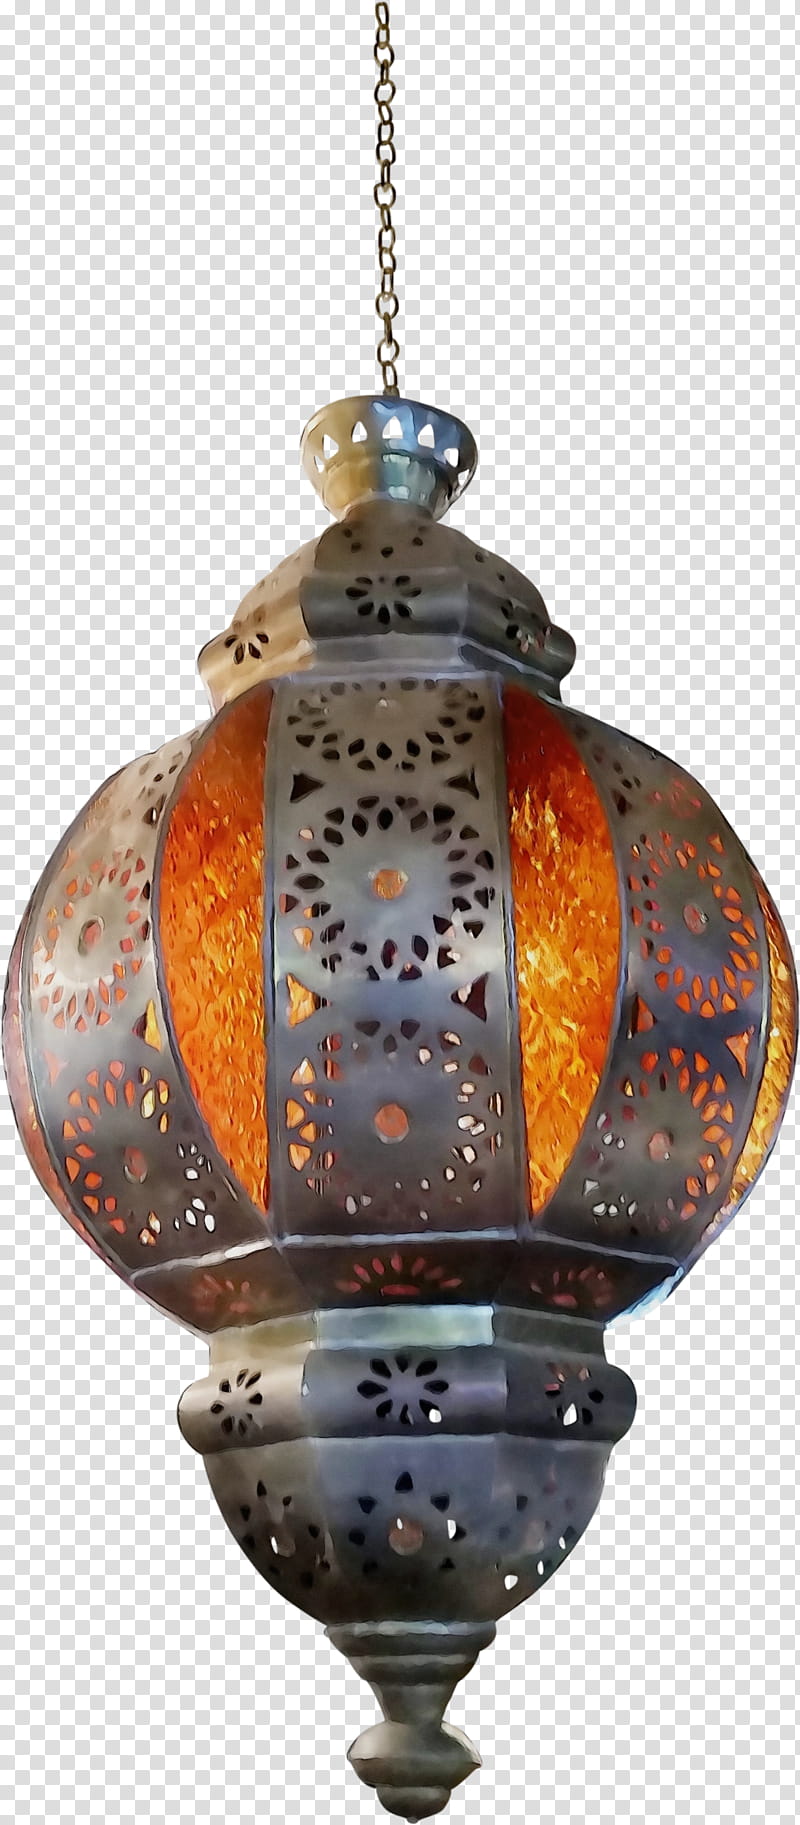 lighting lantern light fixture lamp nightlight, Watercolor, Paint, Wet Ink, Lighting Accessory, Ceramic, Antique, Interior Design transparent background PNG clipart